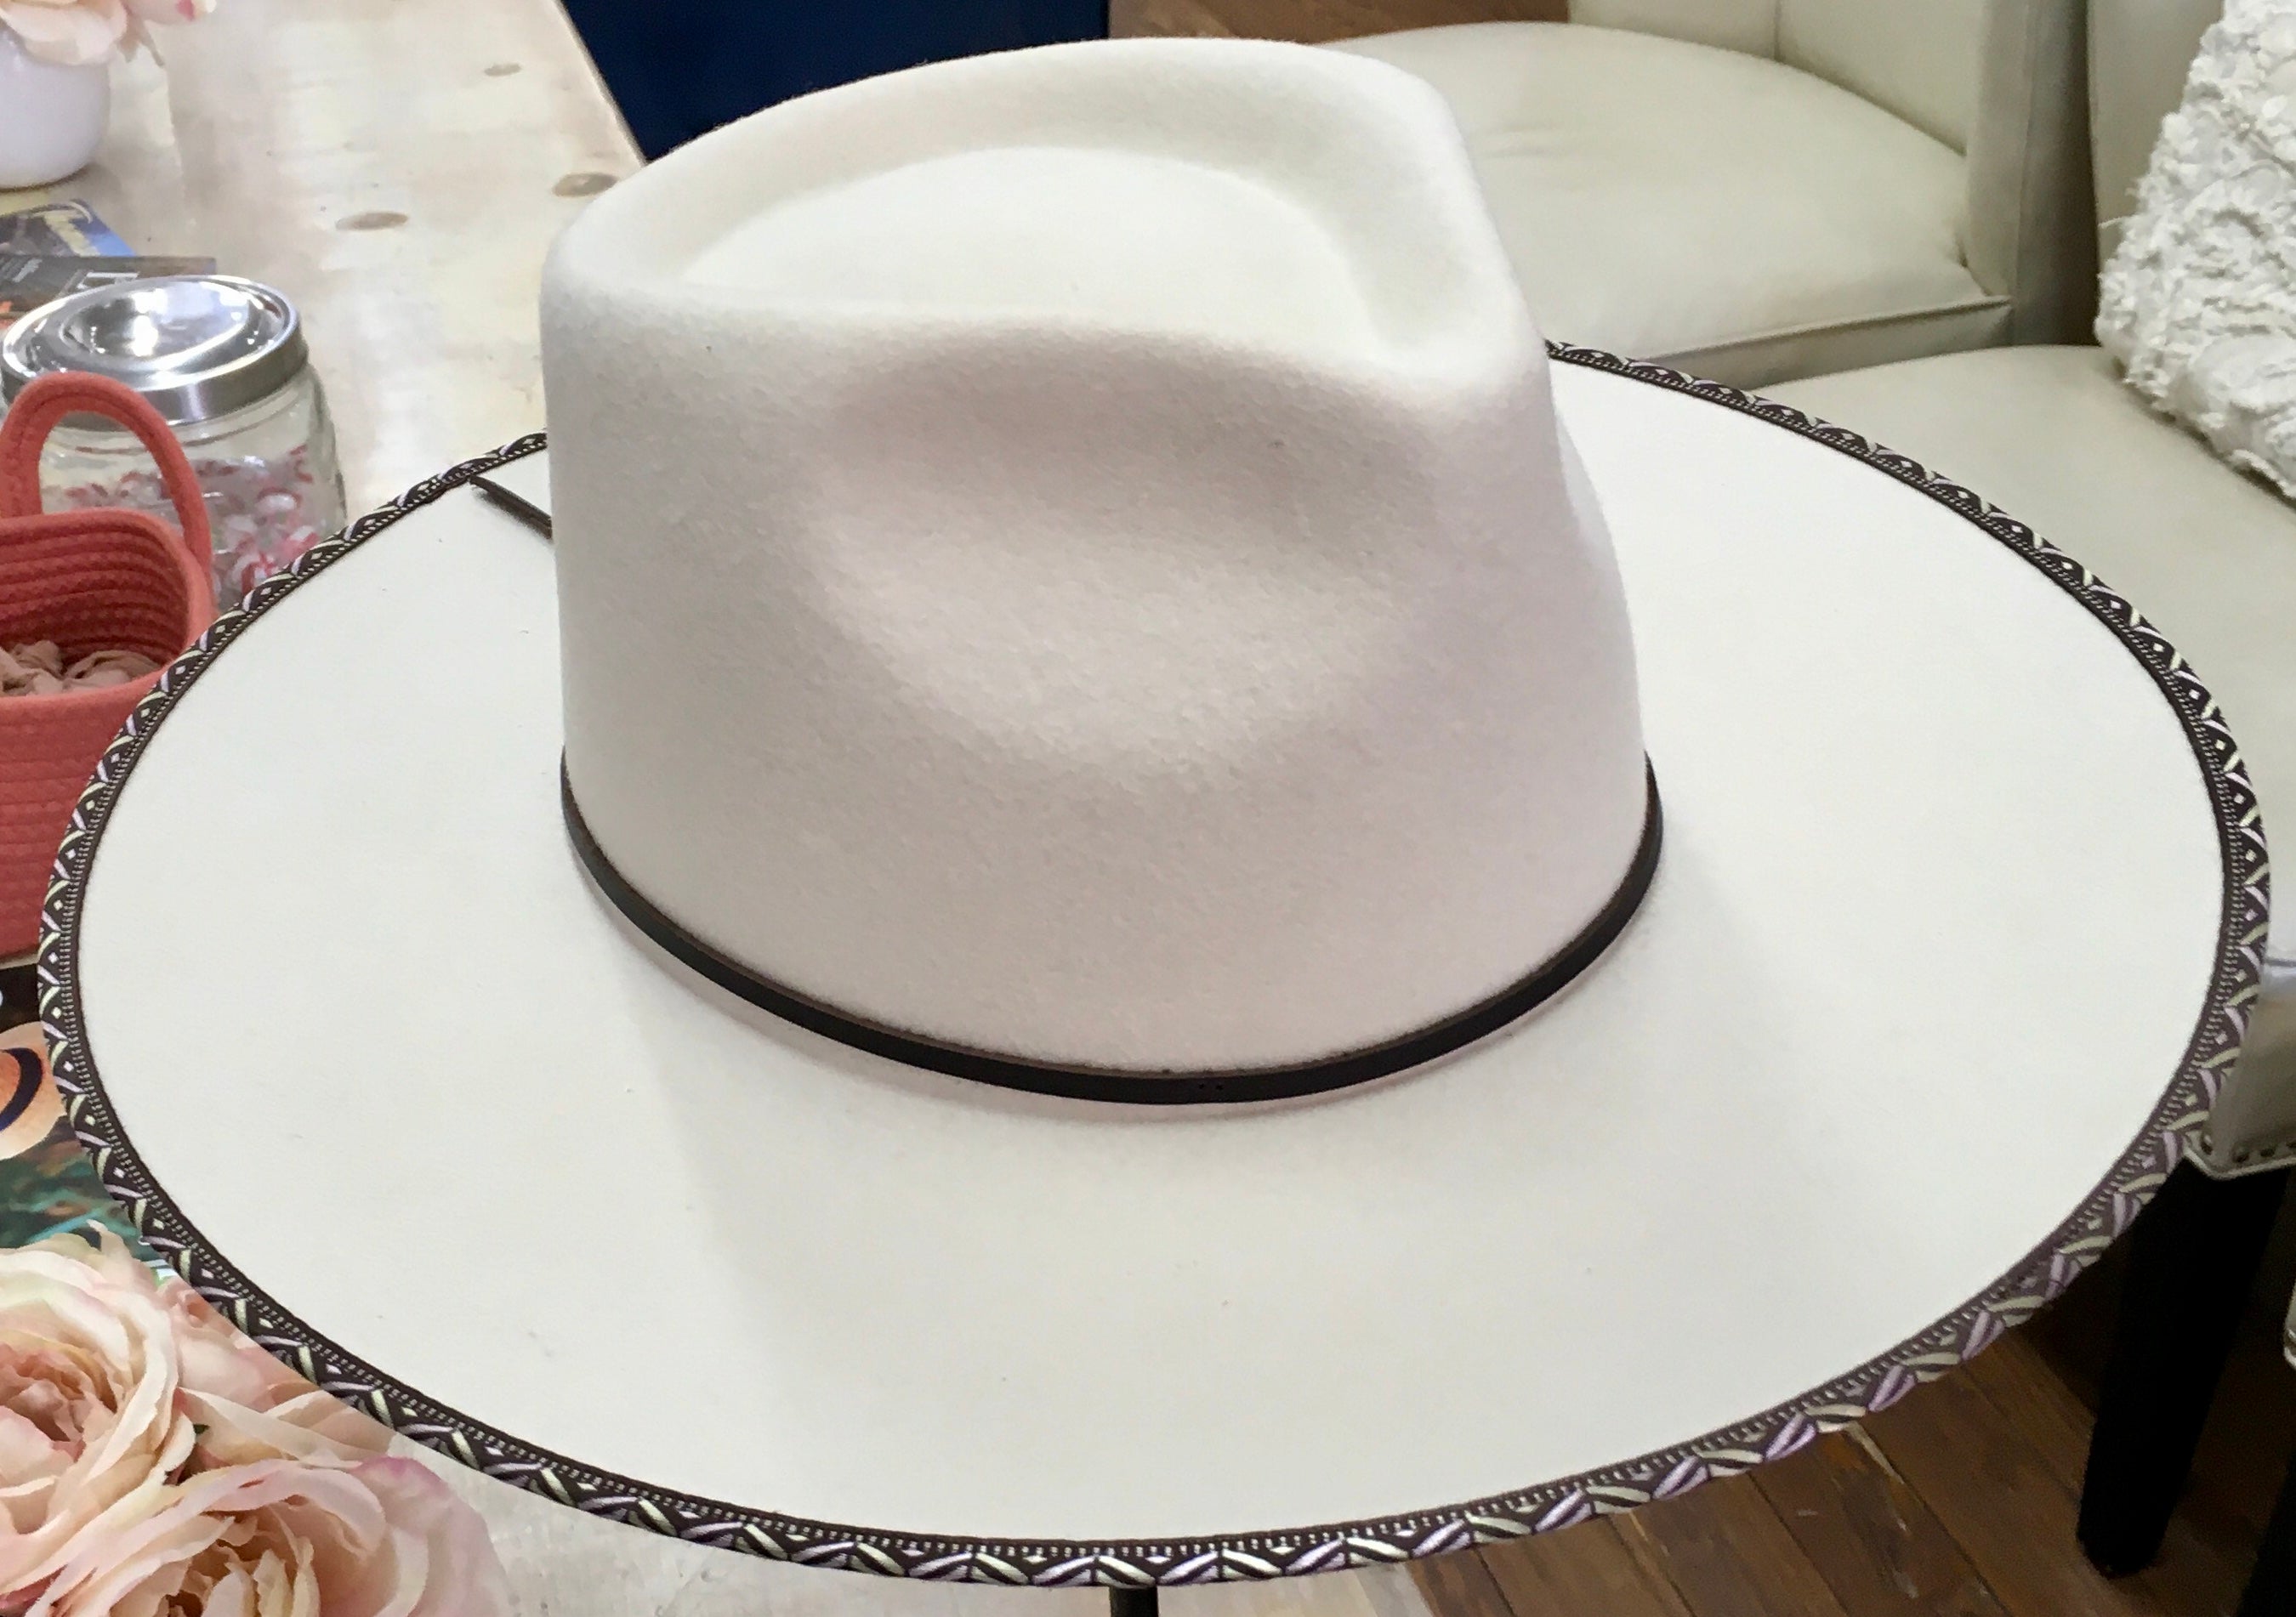 Rancher Hat